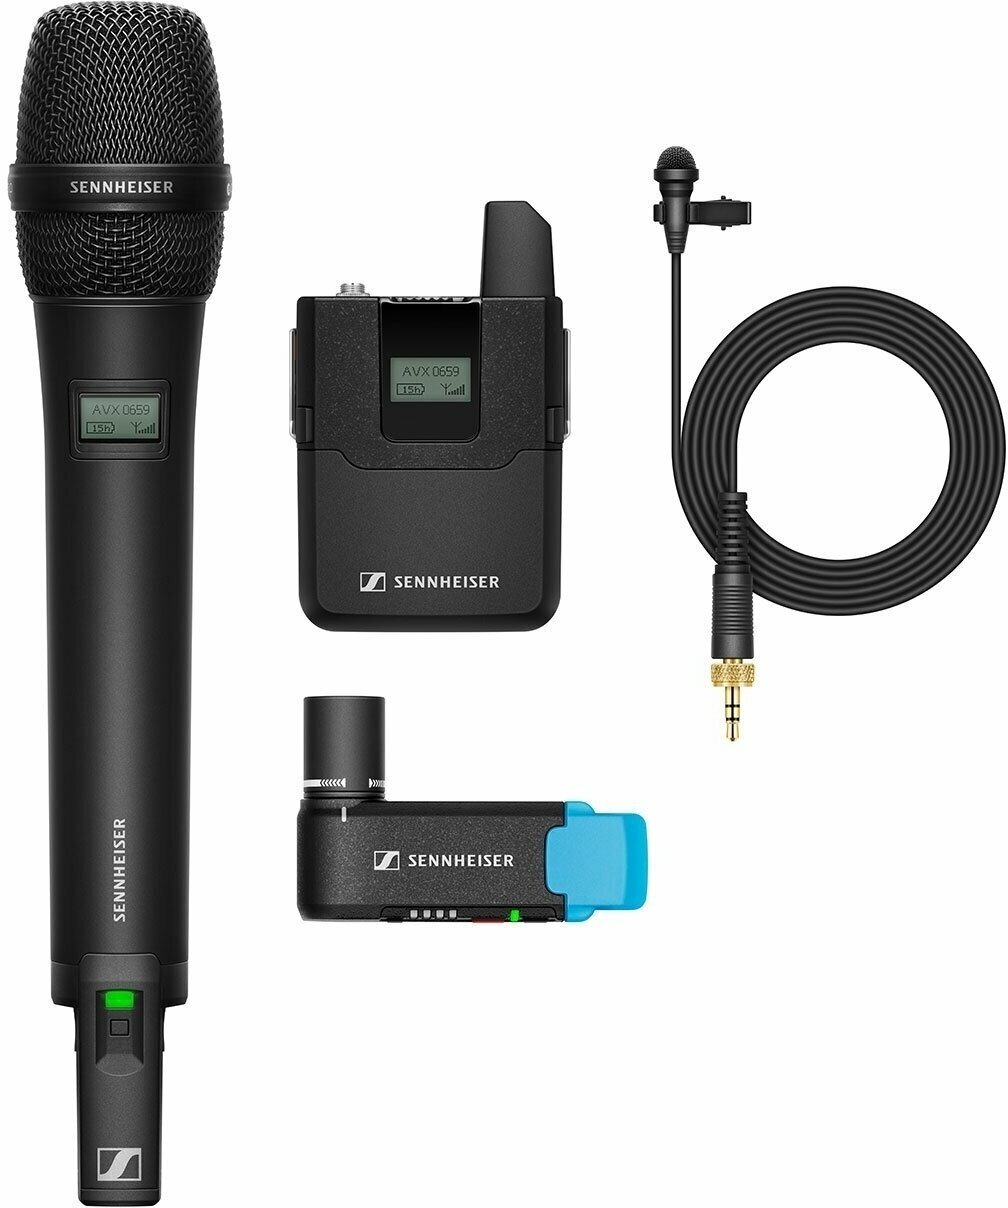 Wireless Handheld Microphone Set Sennheiser AVX ME2/835